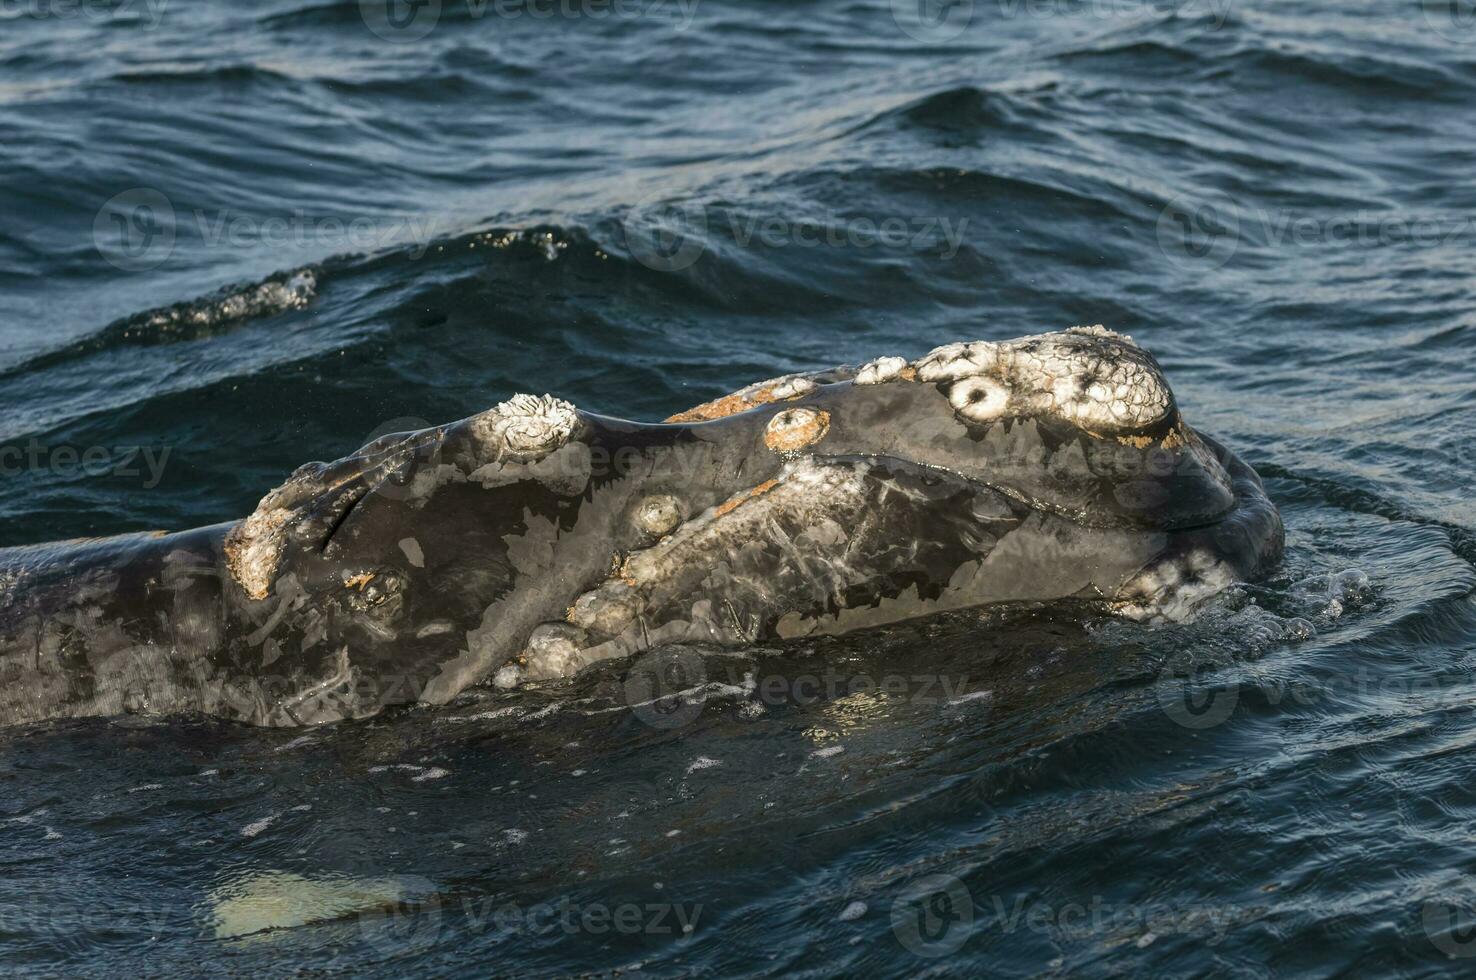 ballena cola fuera de agua, península valdés,patagonia,argentina. foto